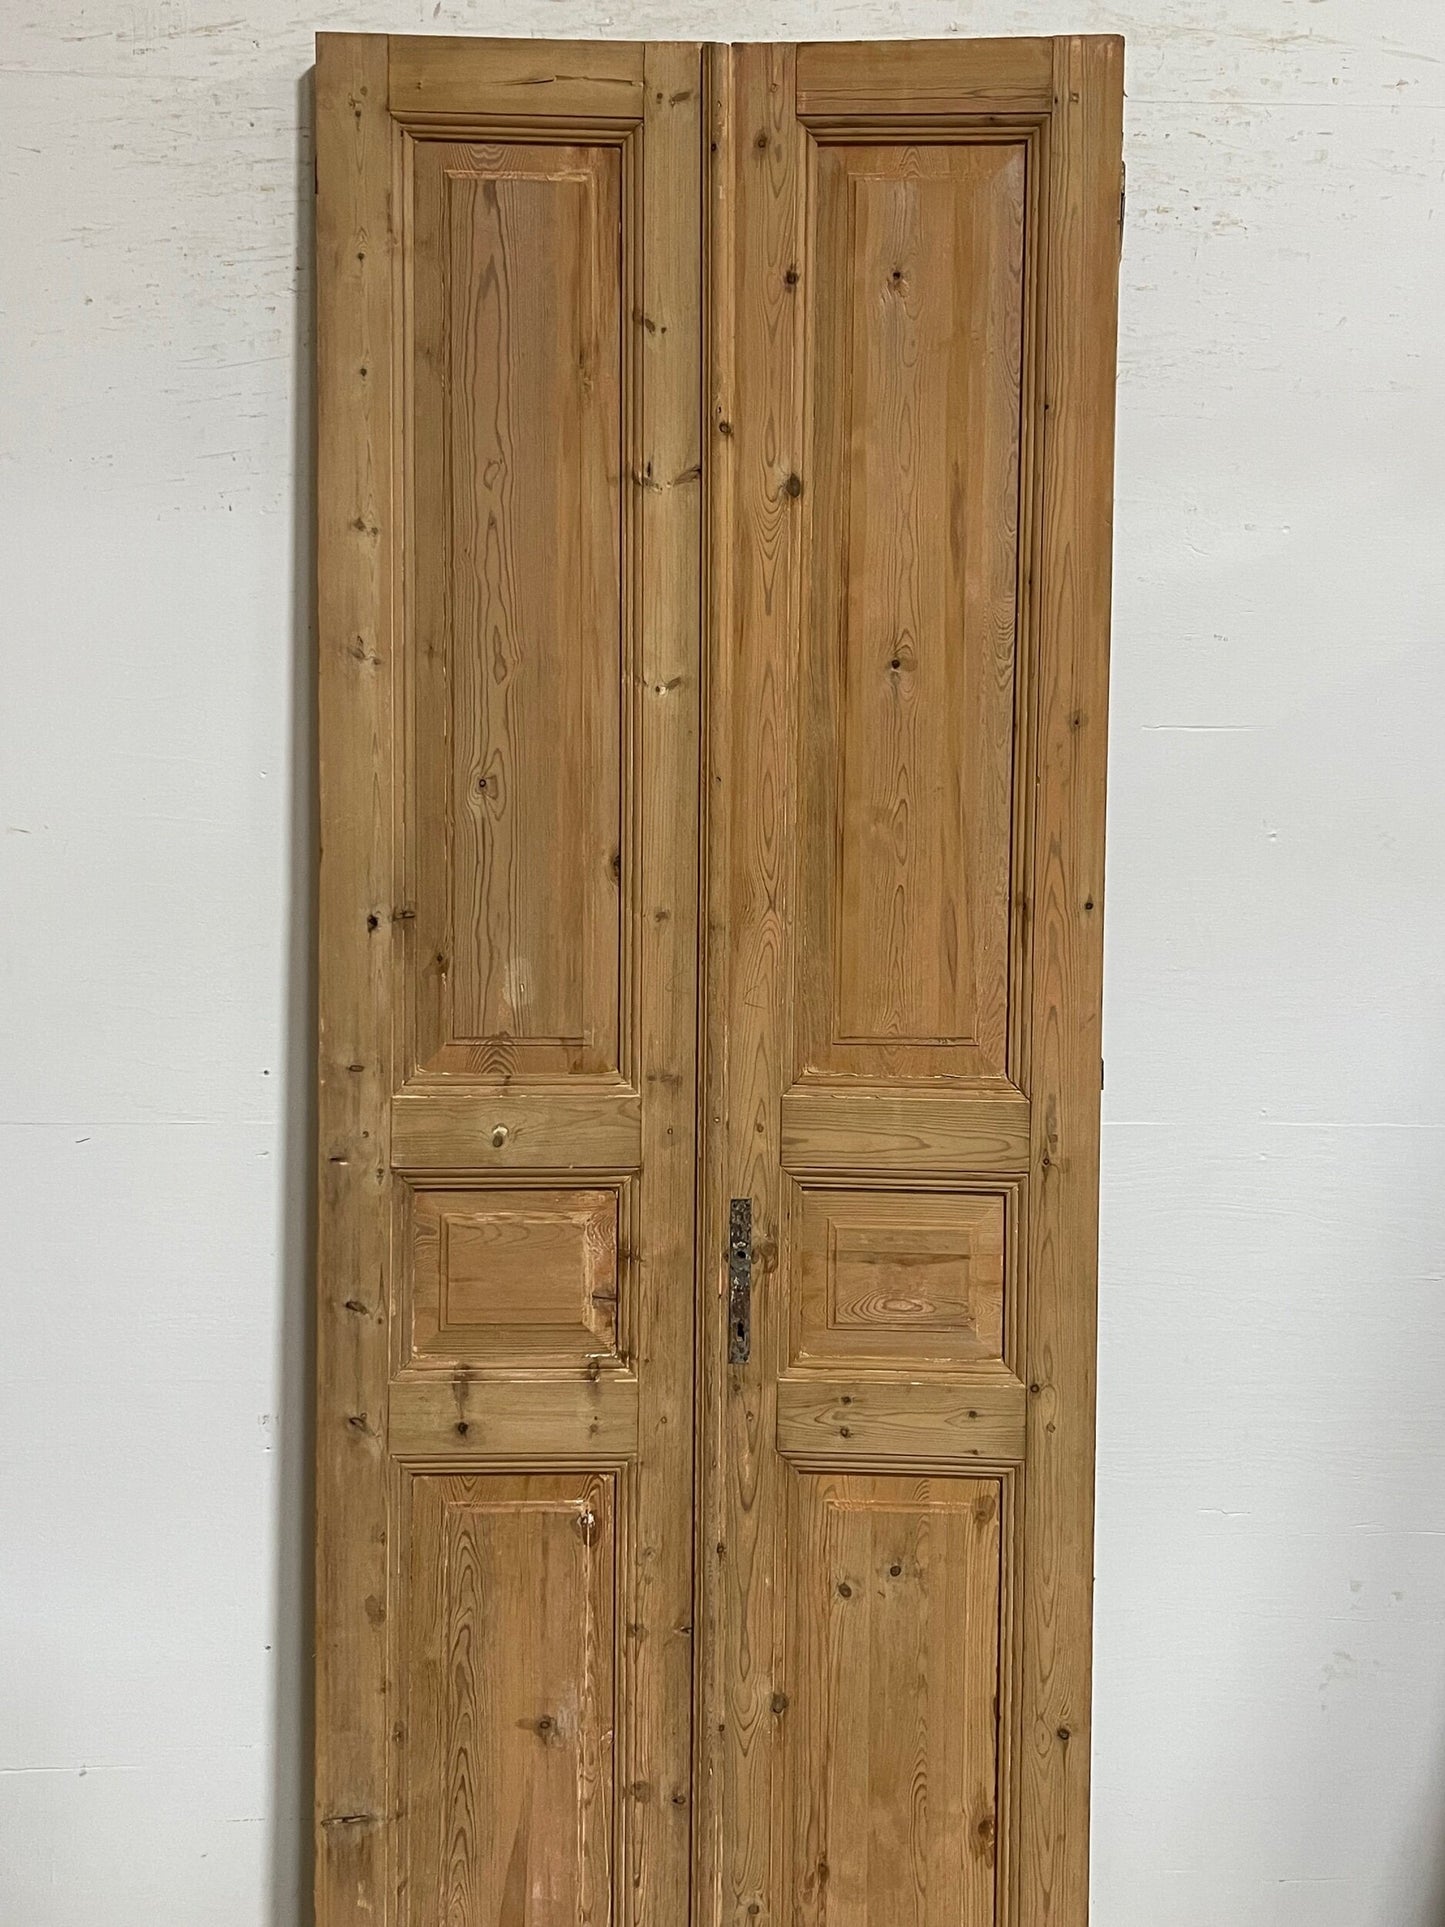 Antique French panel doors (97.25x35.5) I148